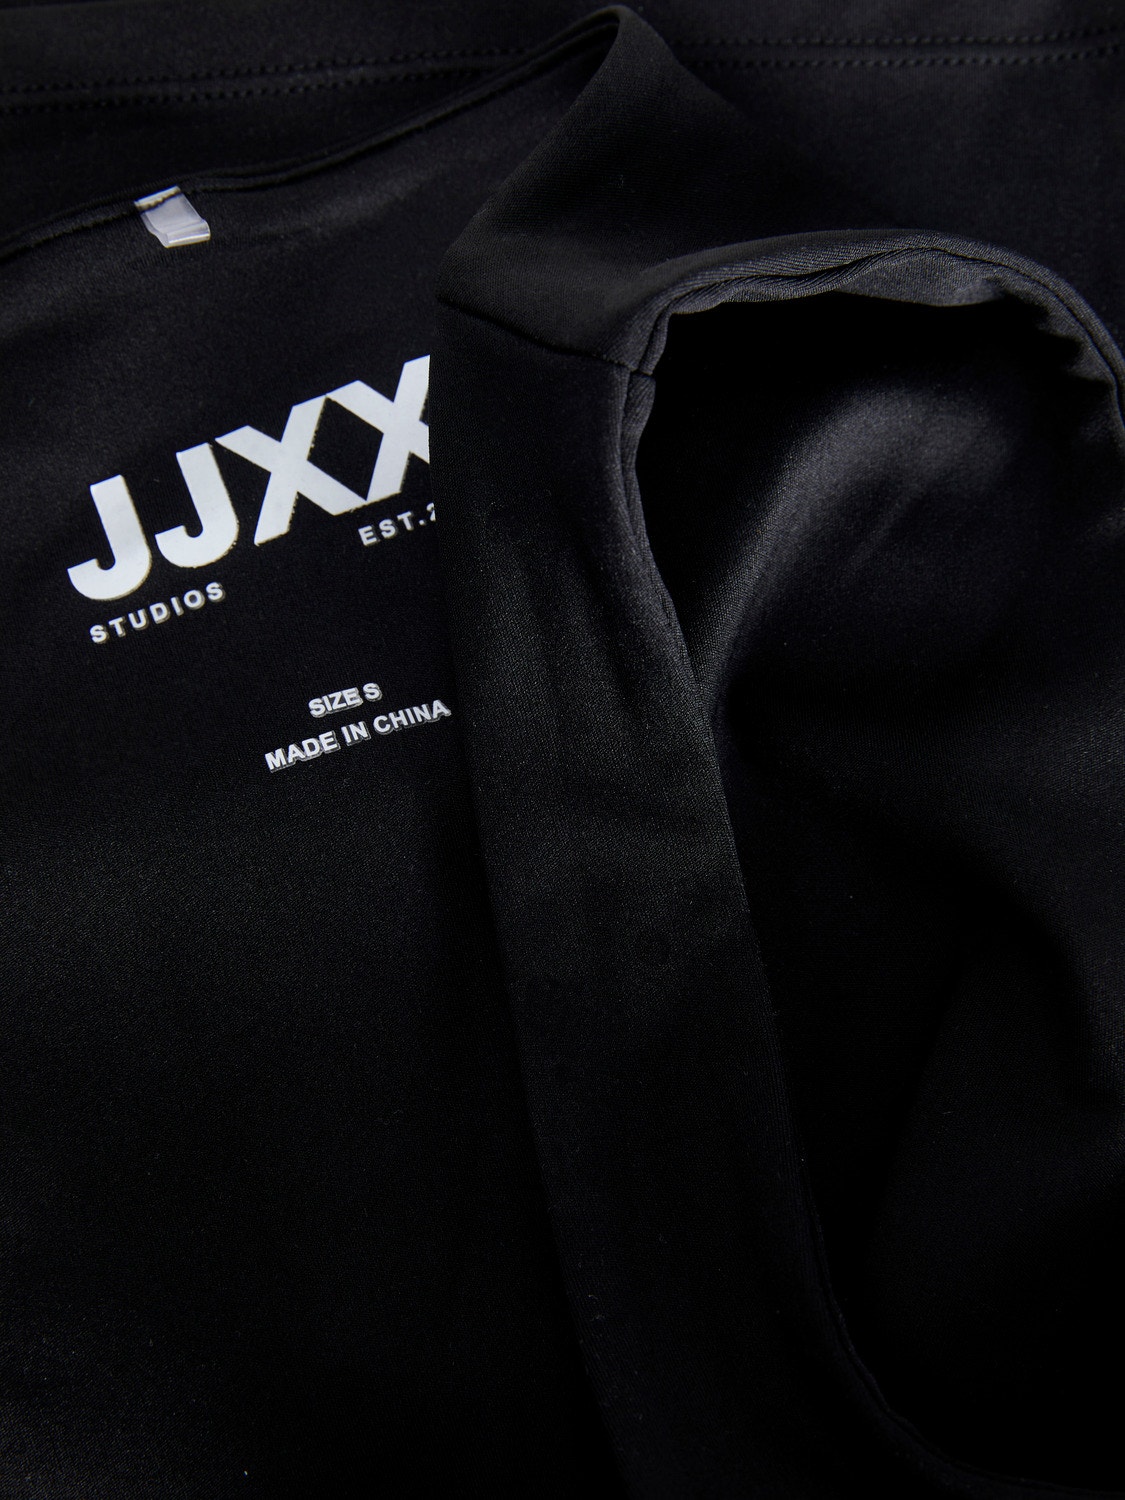 JJXX JXSAGA Camisola regata -Black - 12234140